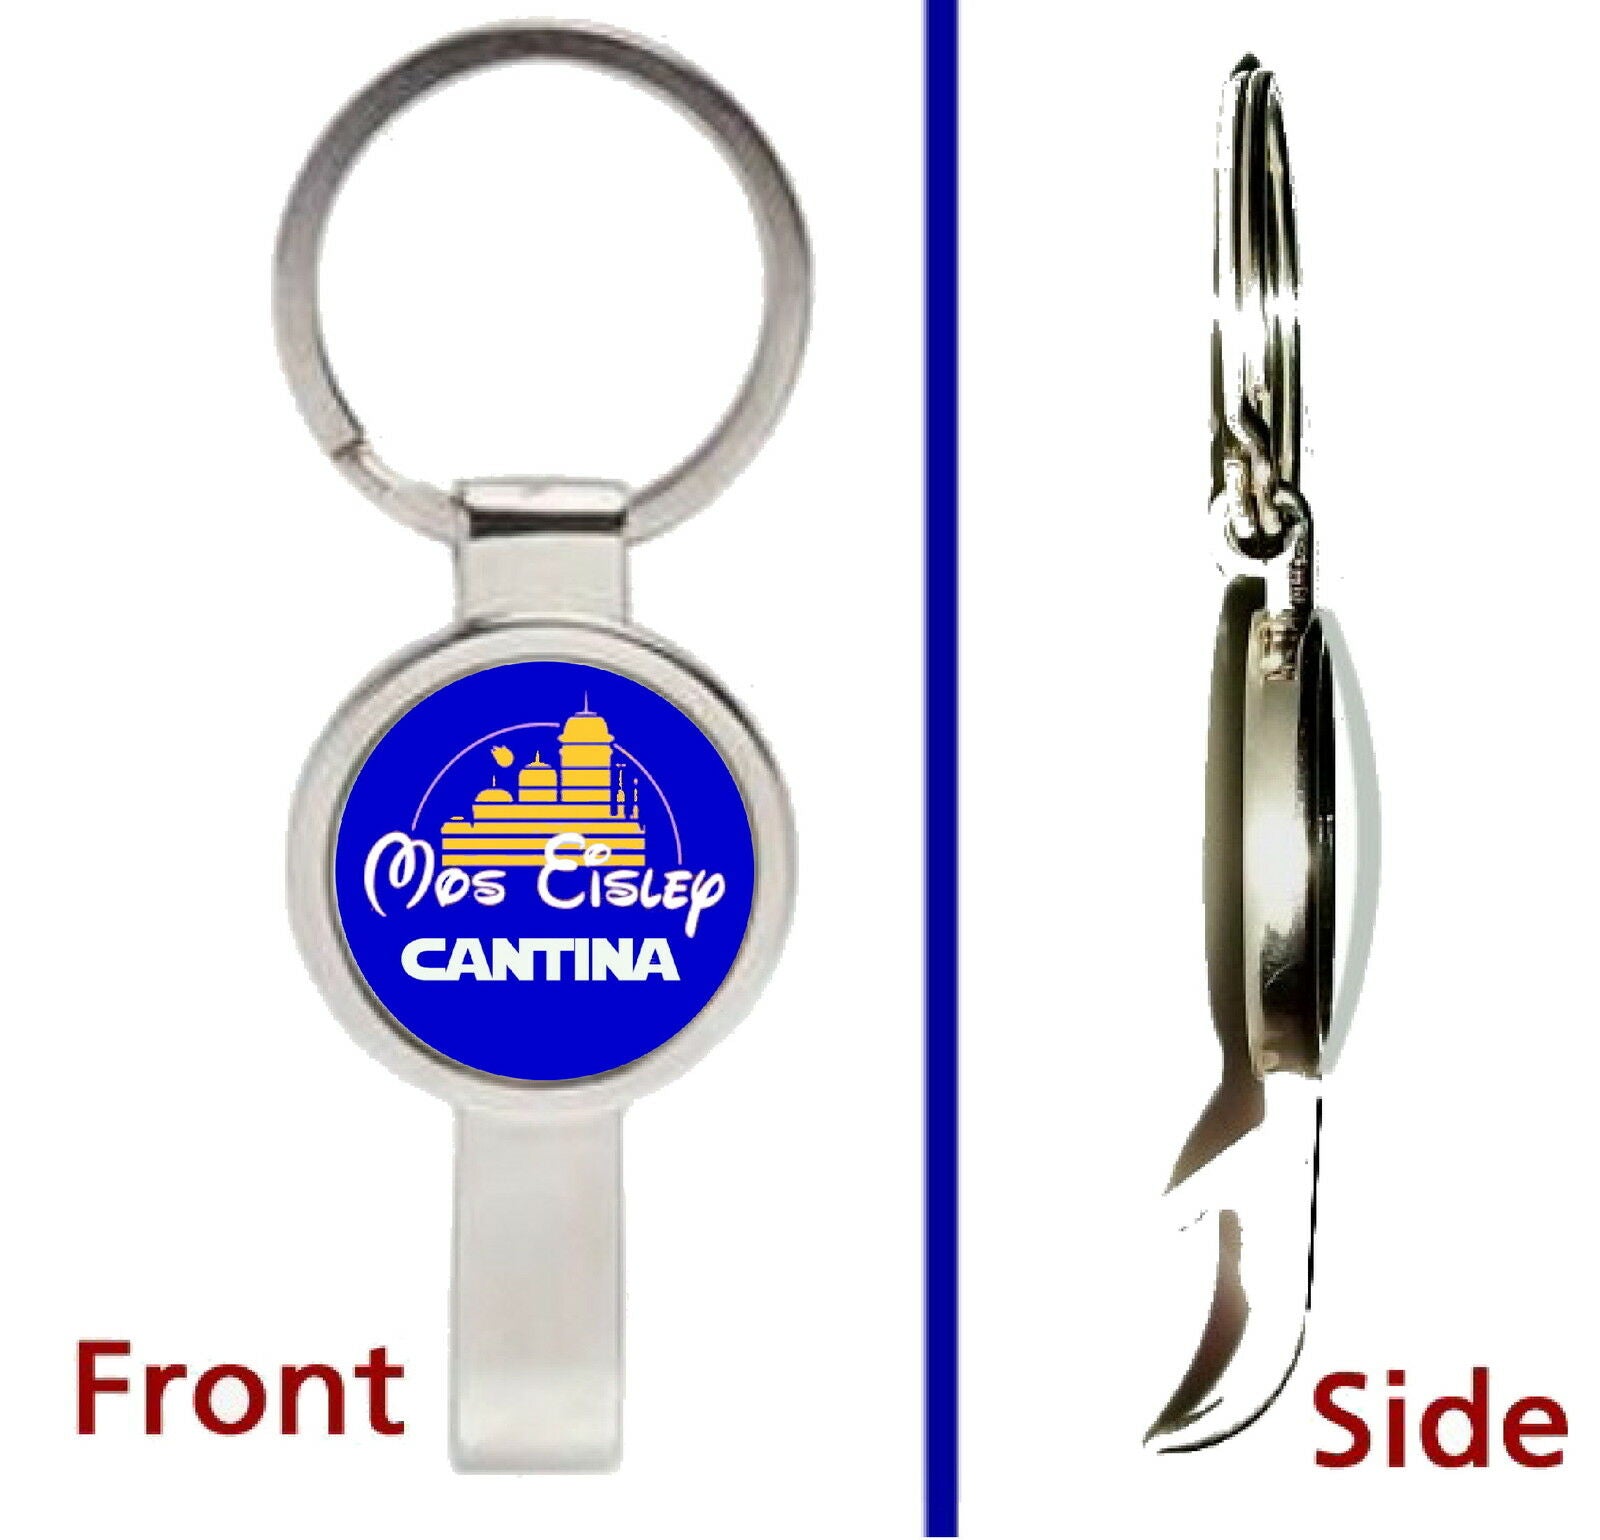 Star Wars Mos Eisley cantina Disney parody Pendant Keychain secret bottle opener